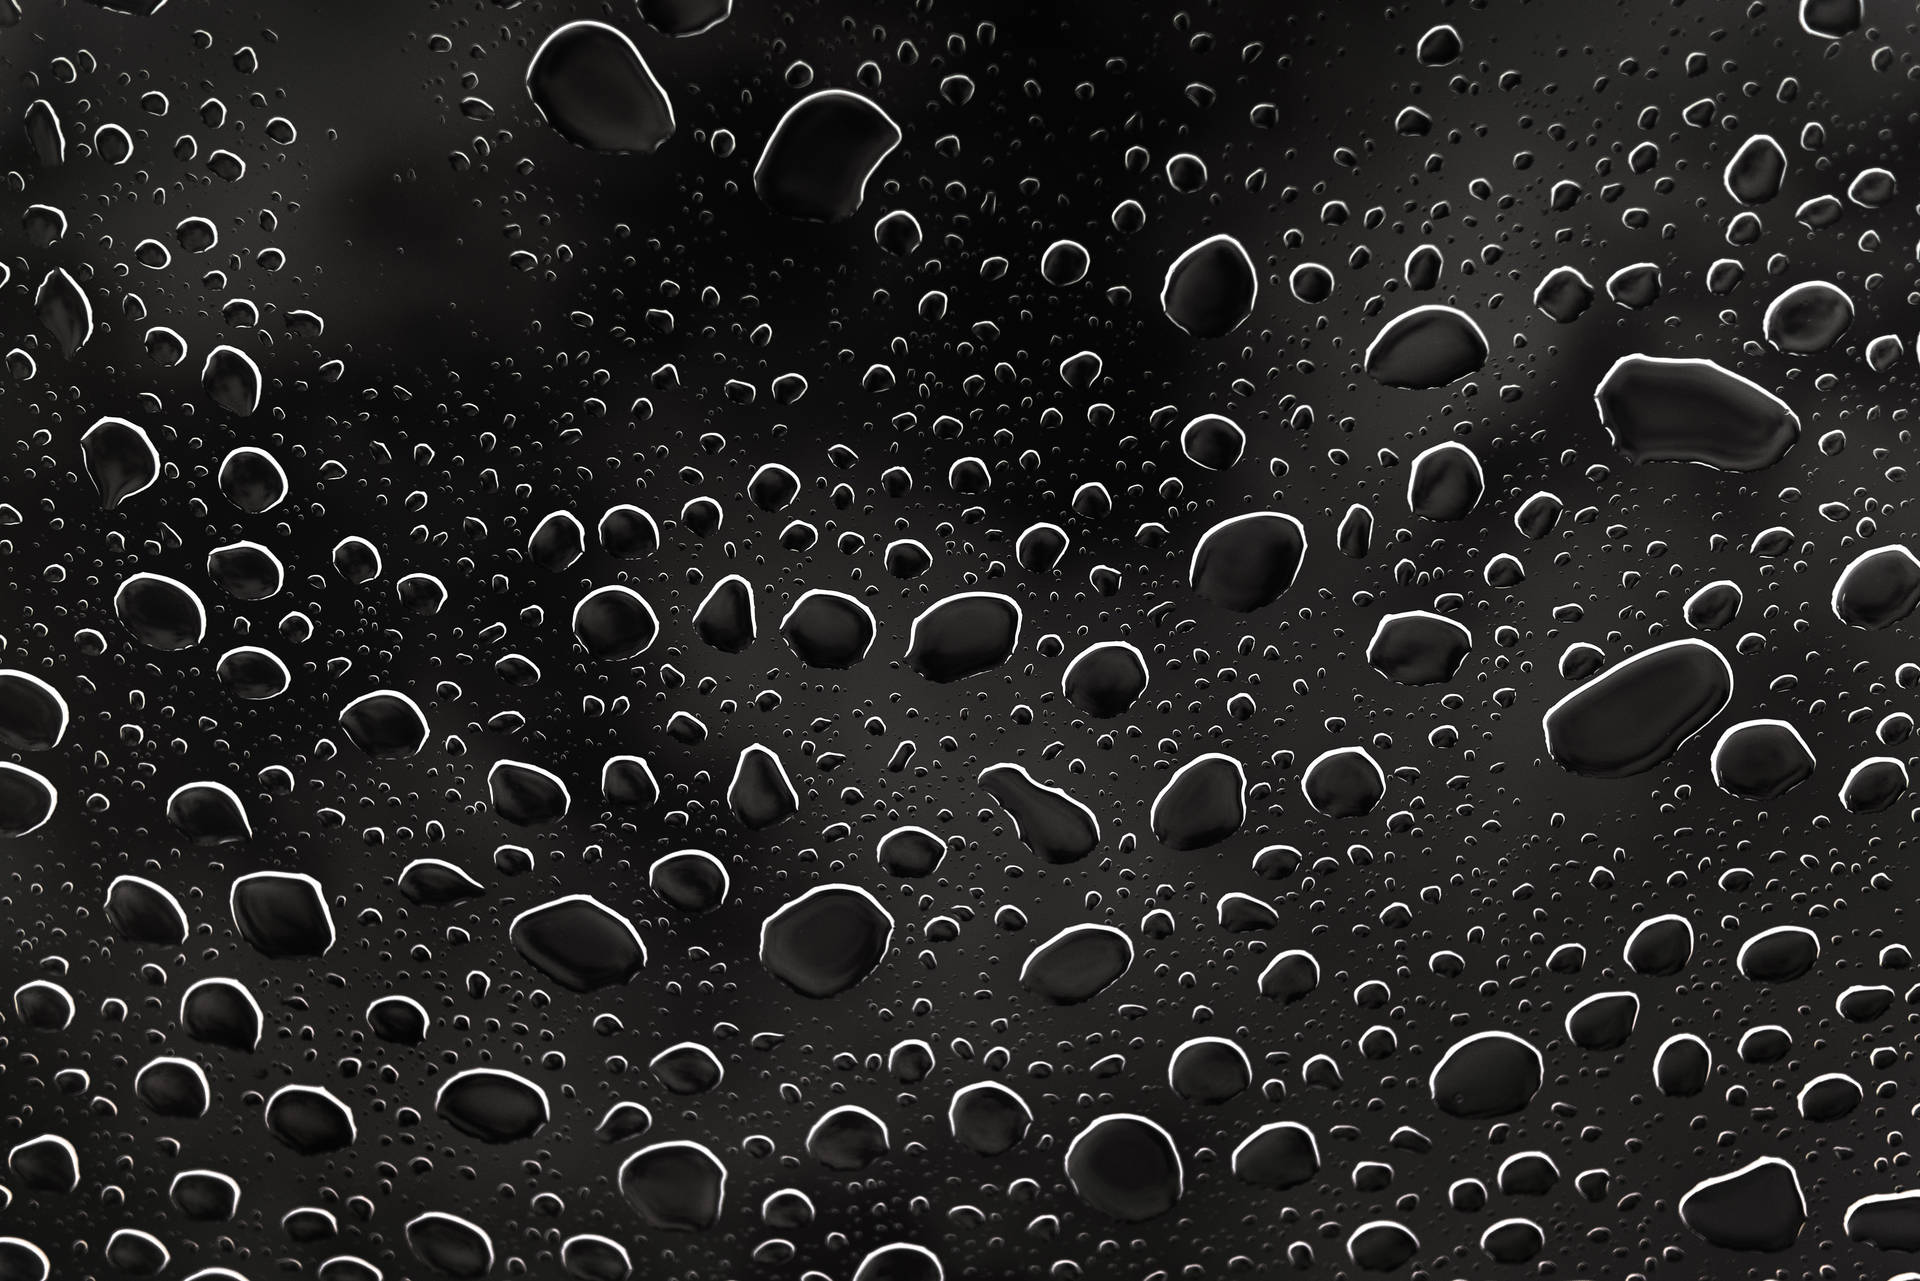 Black Droplets After Raining